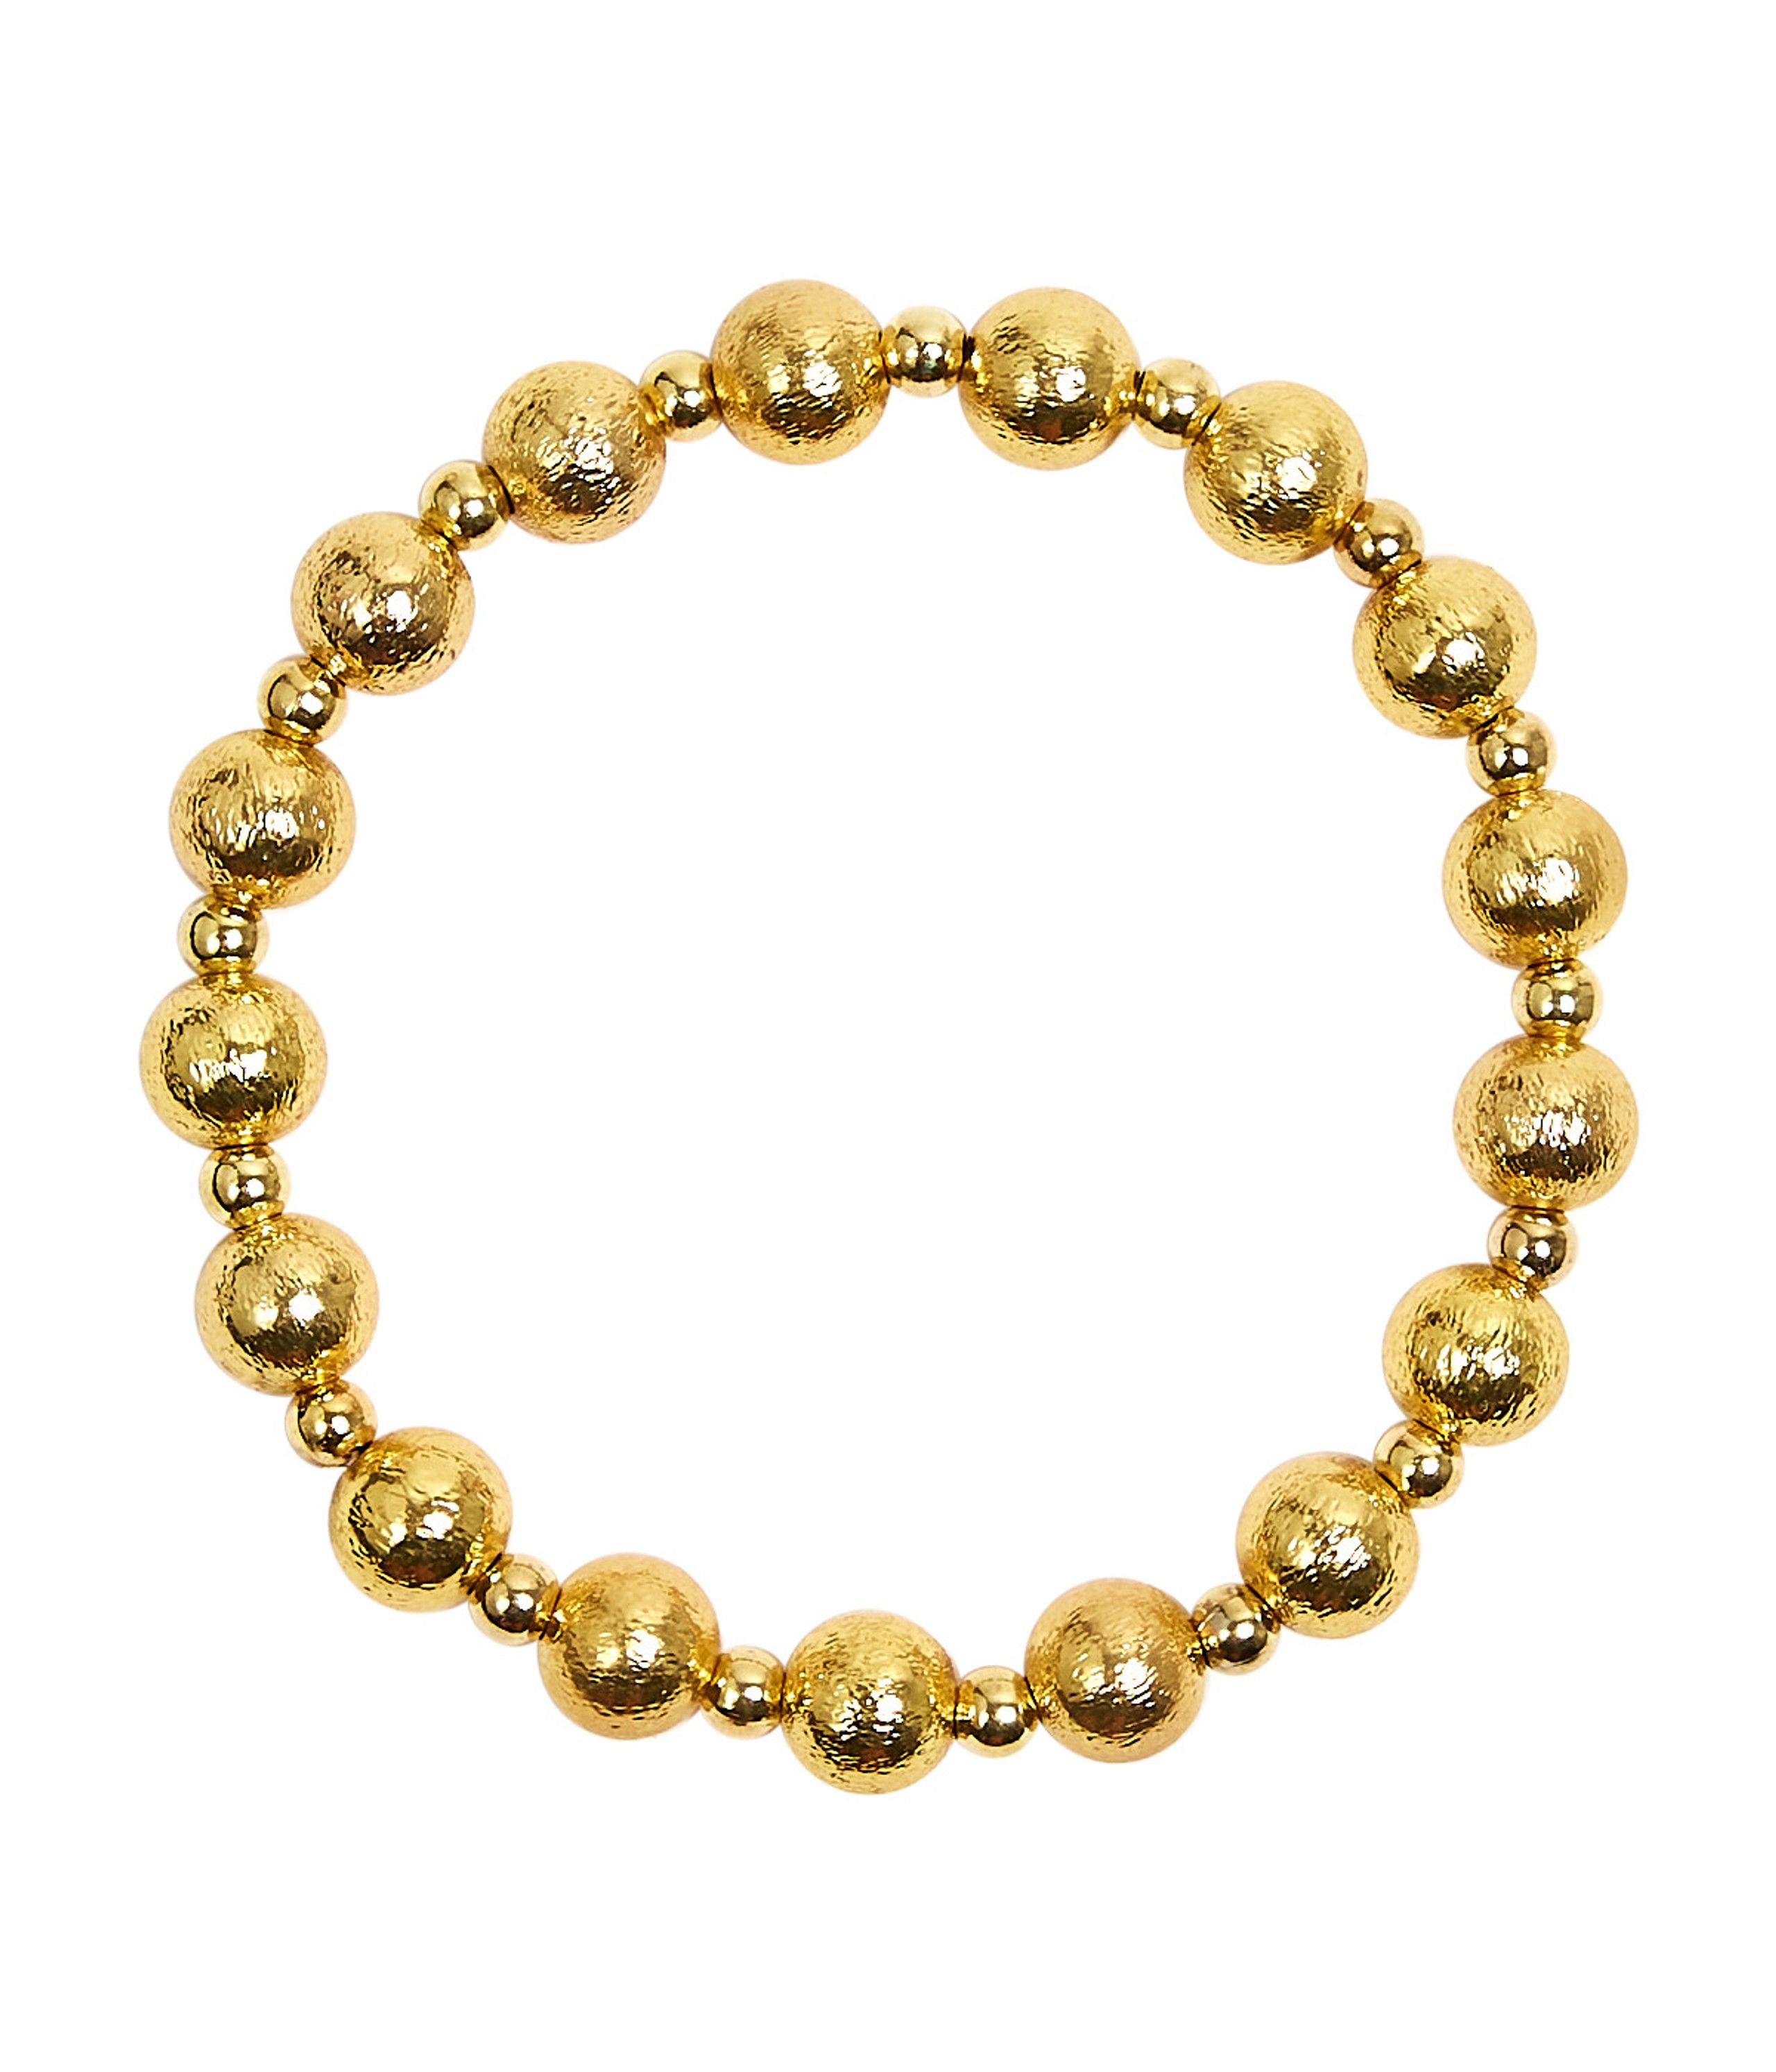 Bean - Mixed Beads Bracelet | Lisi Lerch Inc